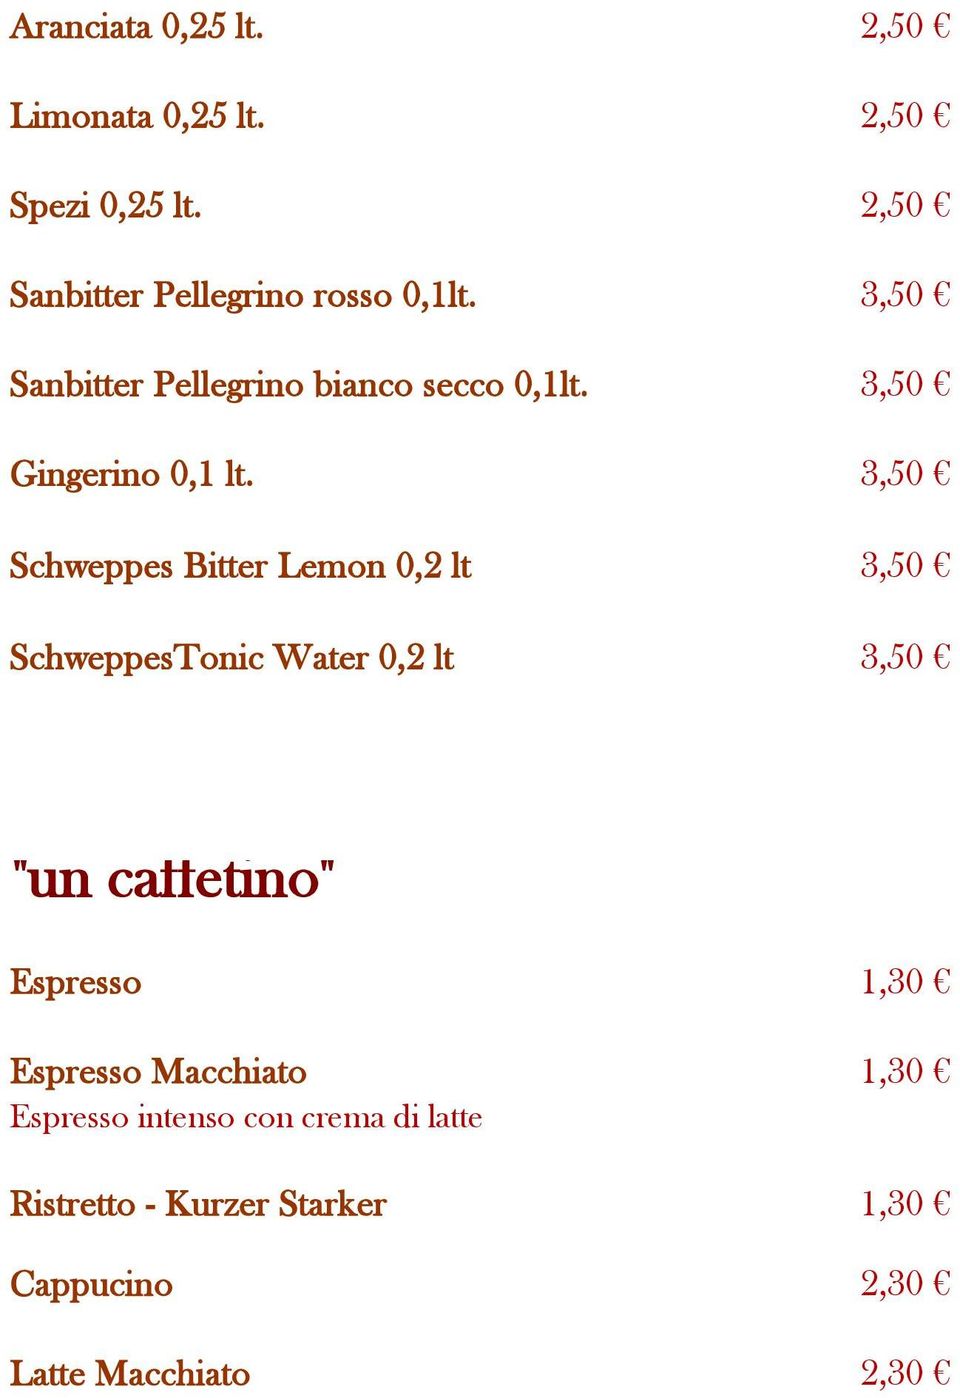 3,50 Schweppes Bitter Lemon 0,2 lt 3,50 SchweppesTonic Water 0,2 lt 3,50 "un caffetino" Espresso 1,30 Espresso